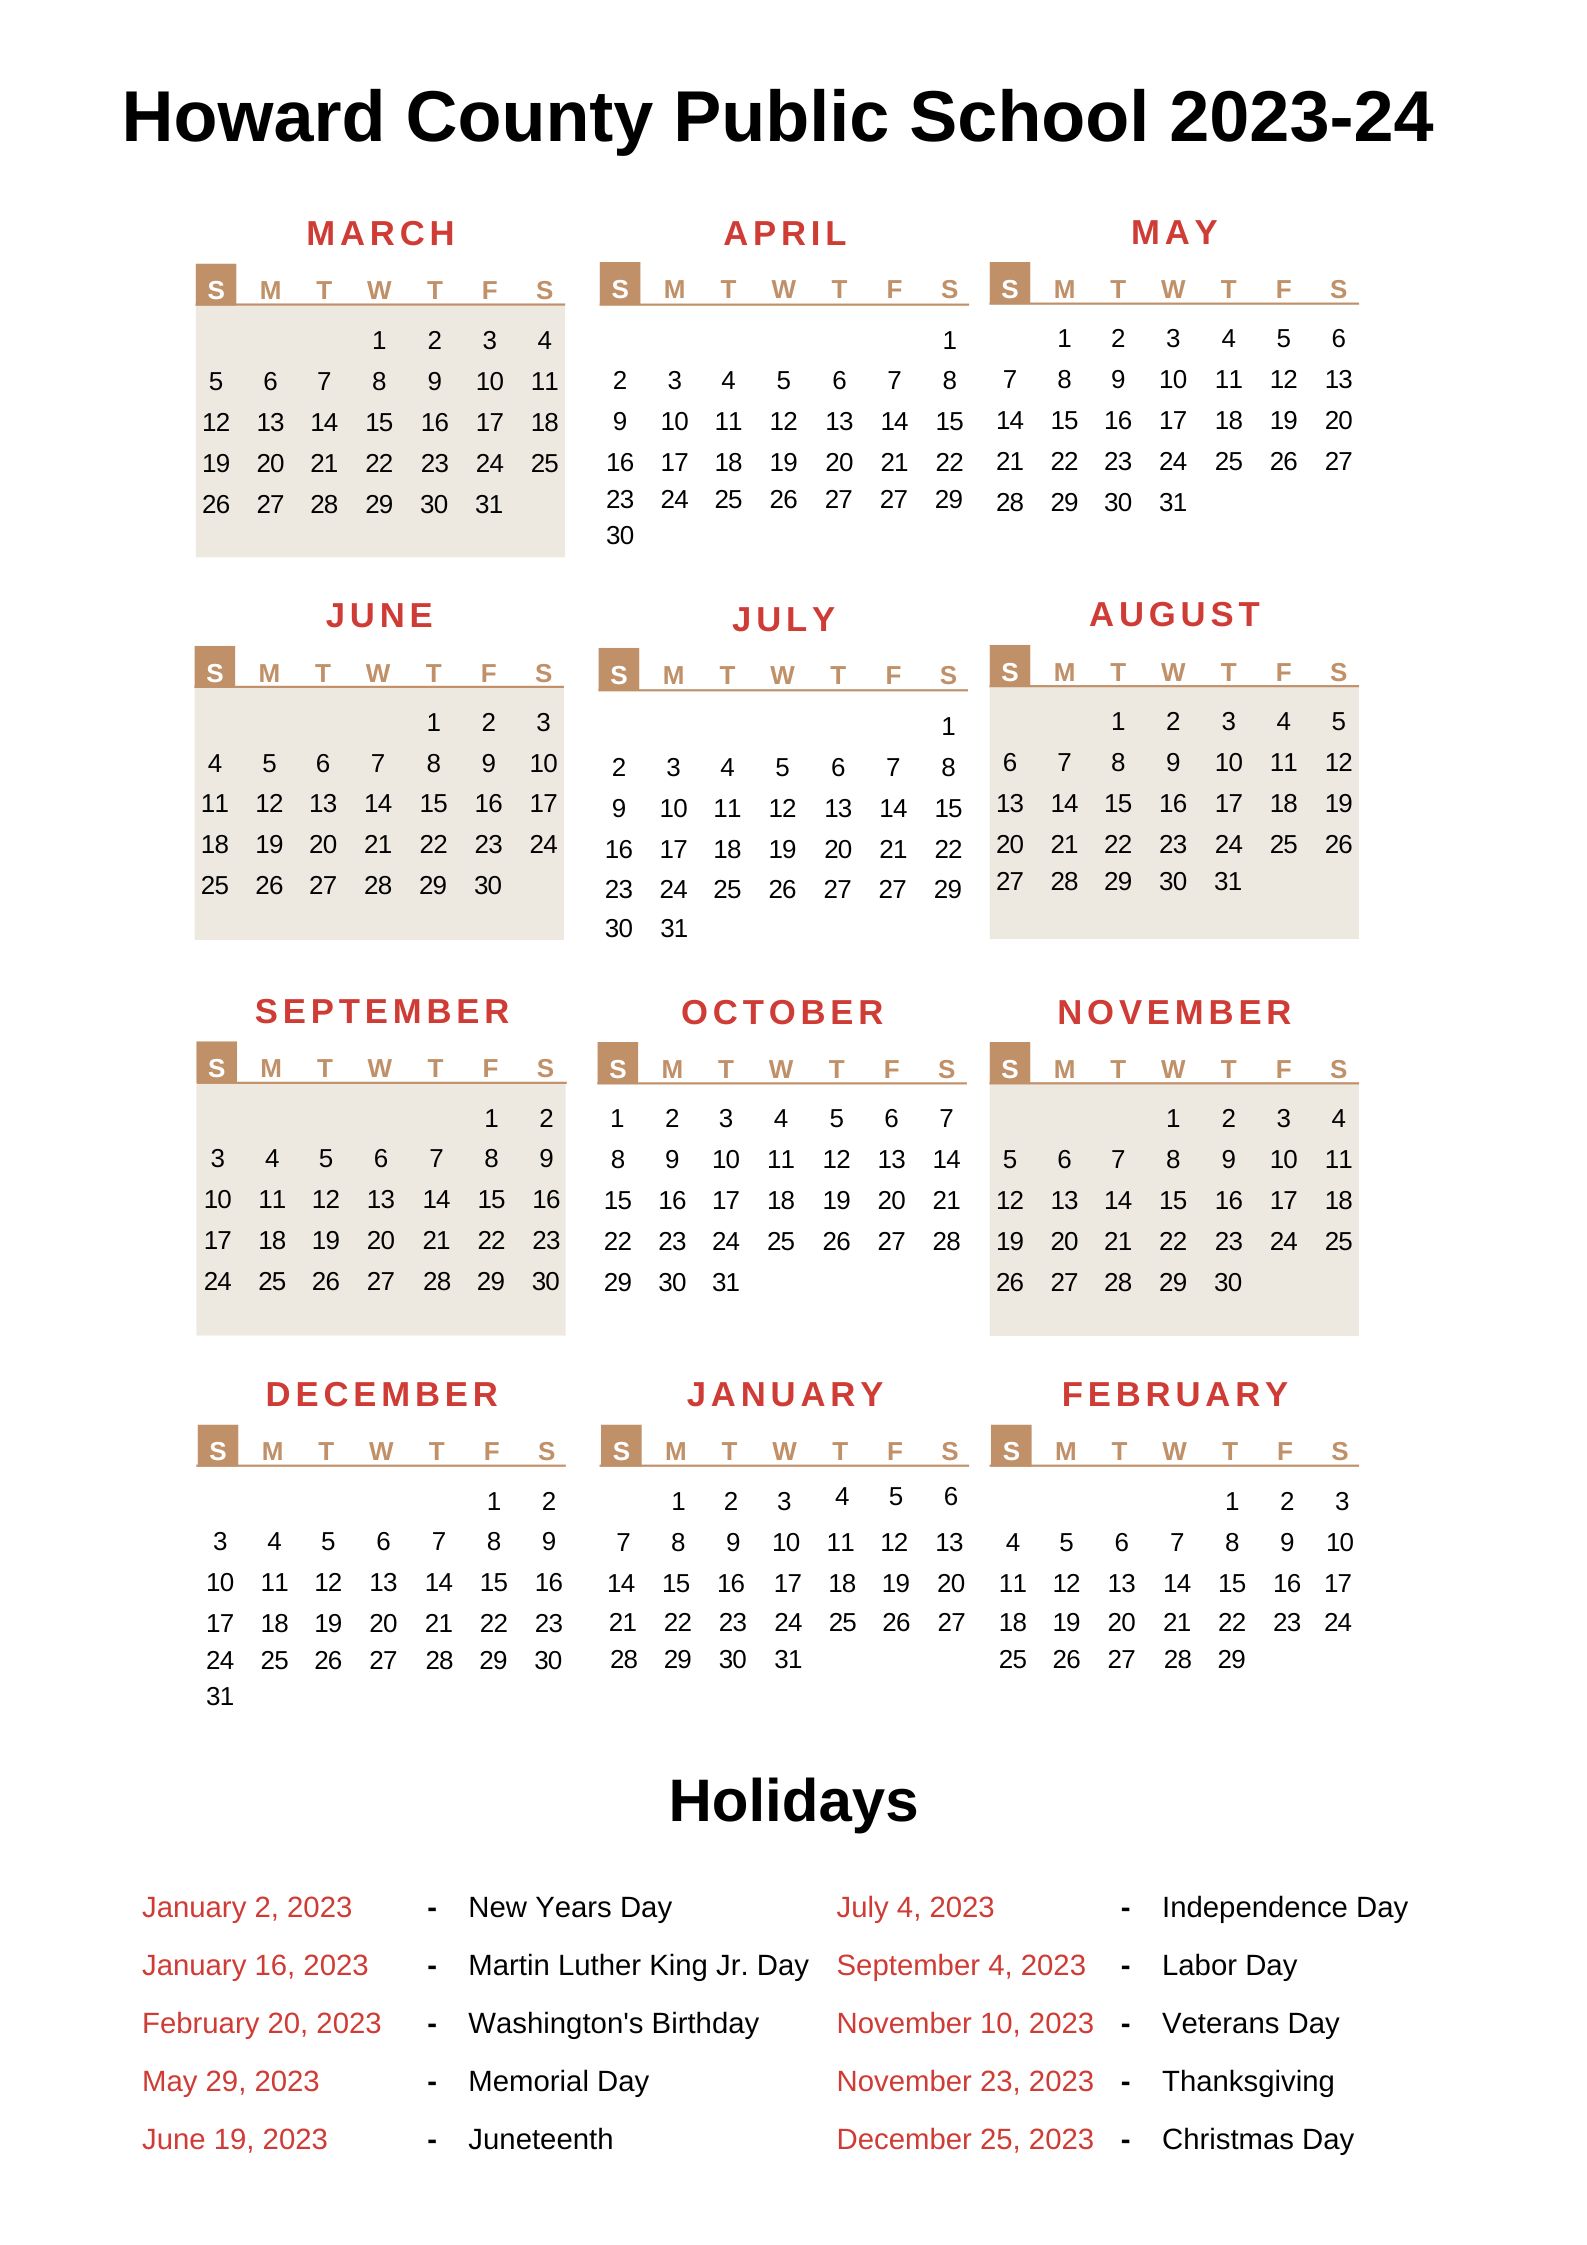 Howard County Public Schools Calendar 2023 24 With Holidays